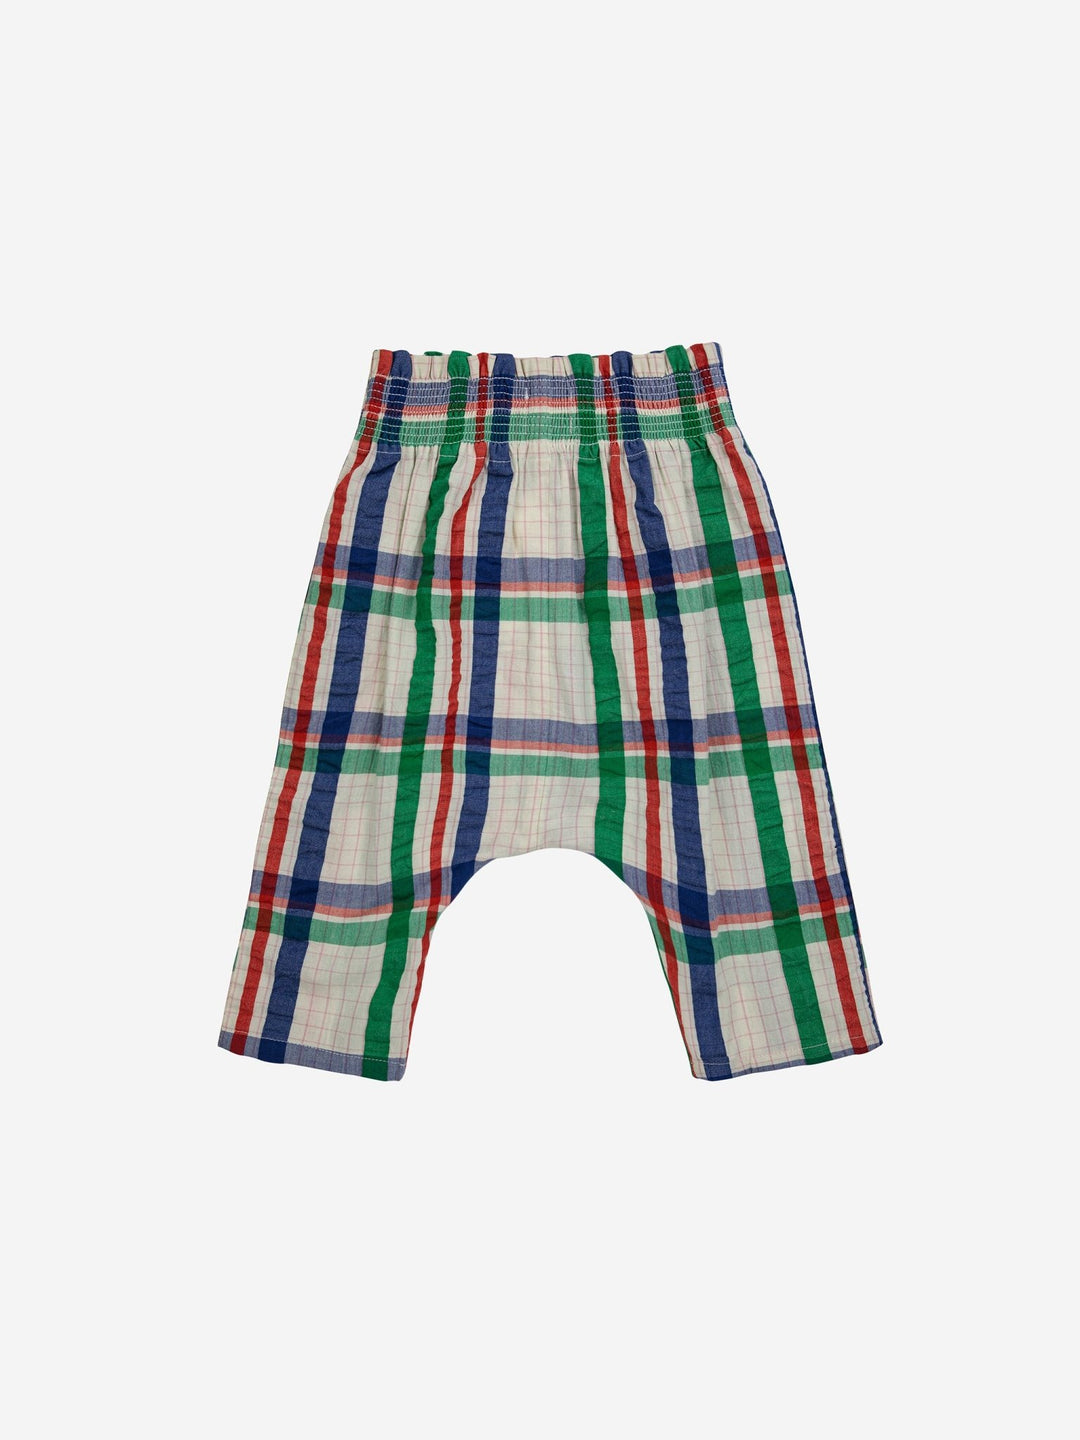 Madras Checks Woven Harem Pants - Multicolor - Posh New York